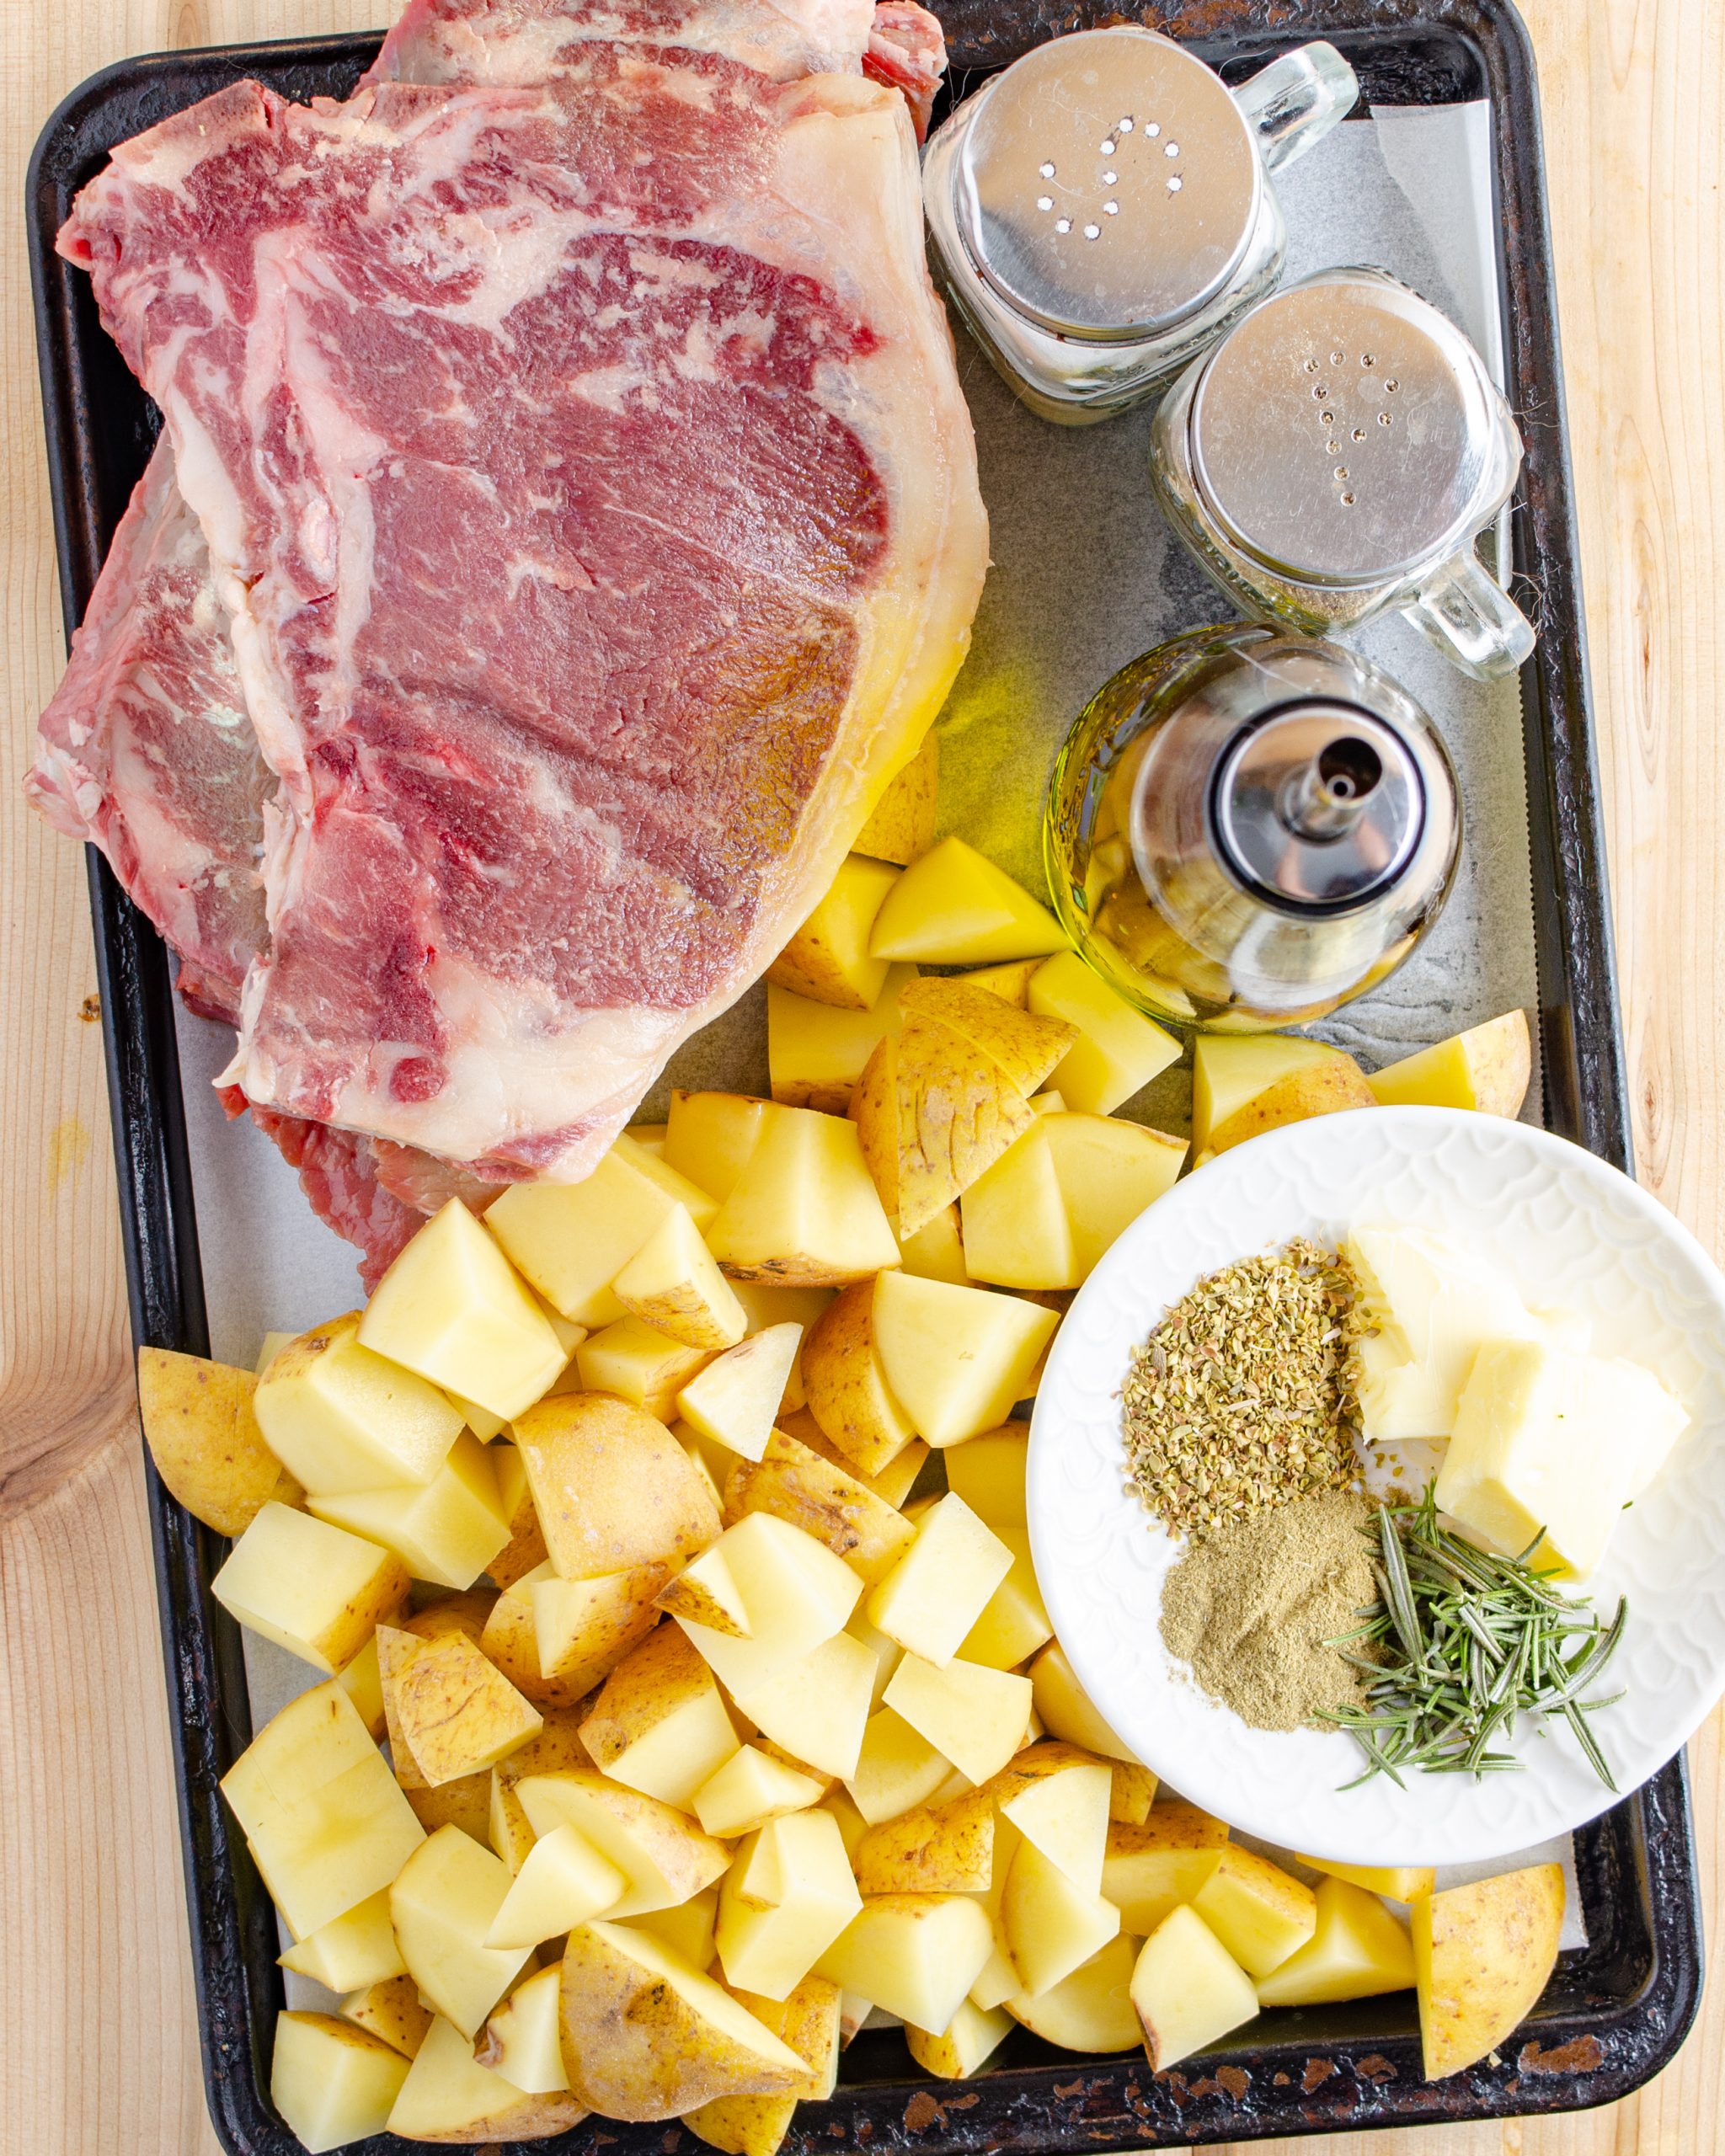 Garlic Herb Potatoes and Steak Skillet Ingredients